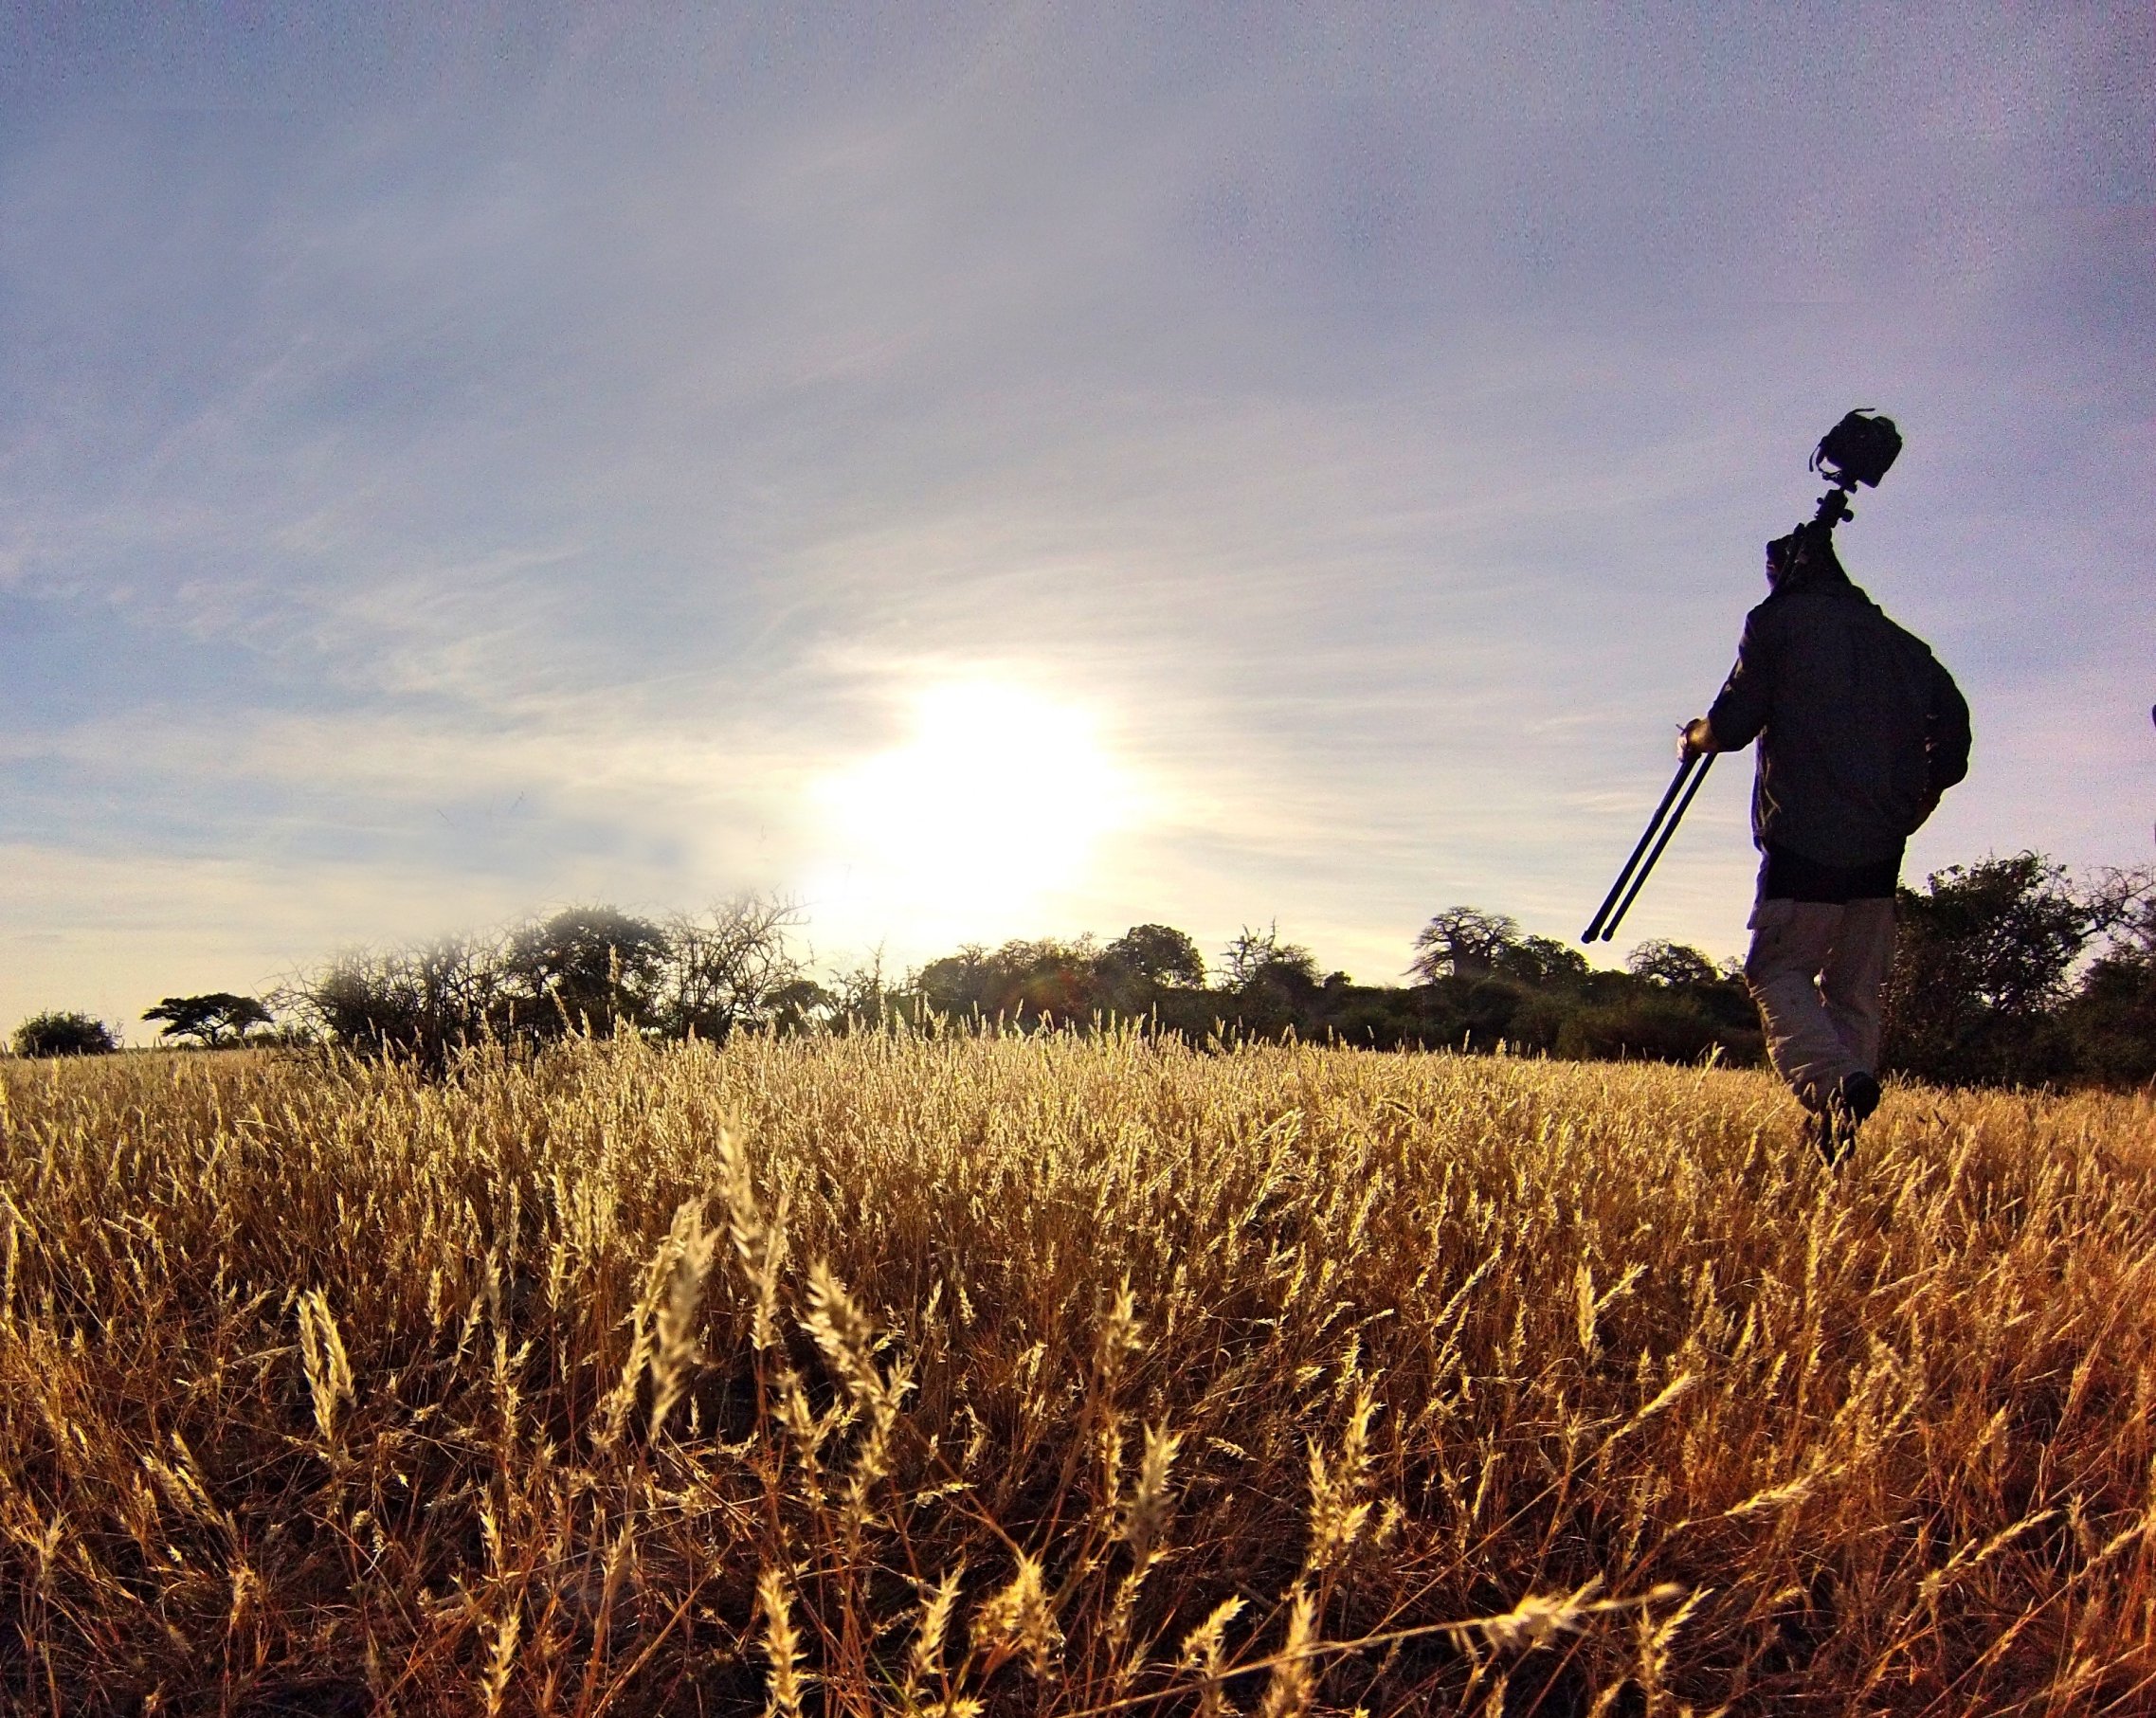 A photographer walks across a feild of wheat while holding a long tripod.